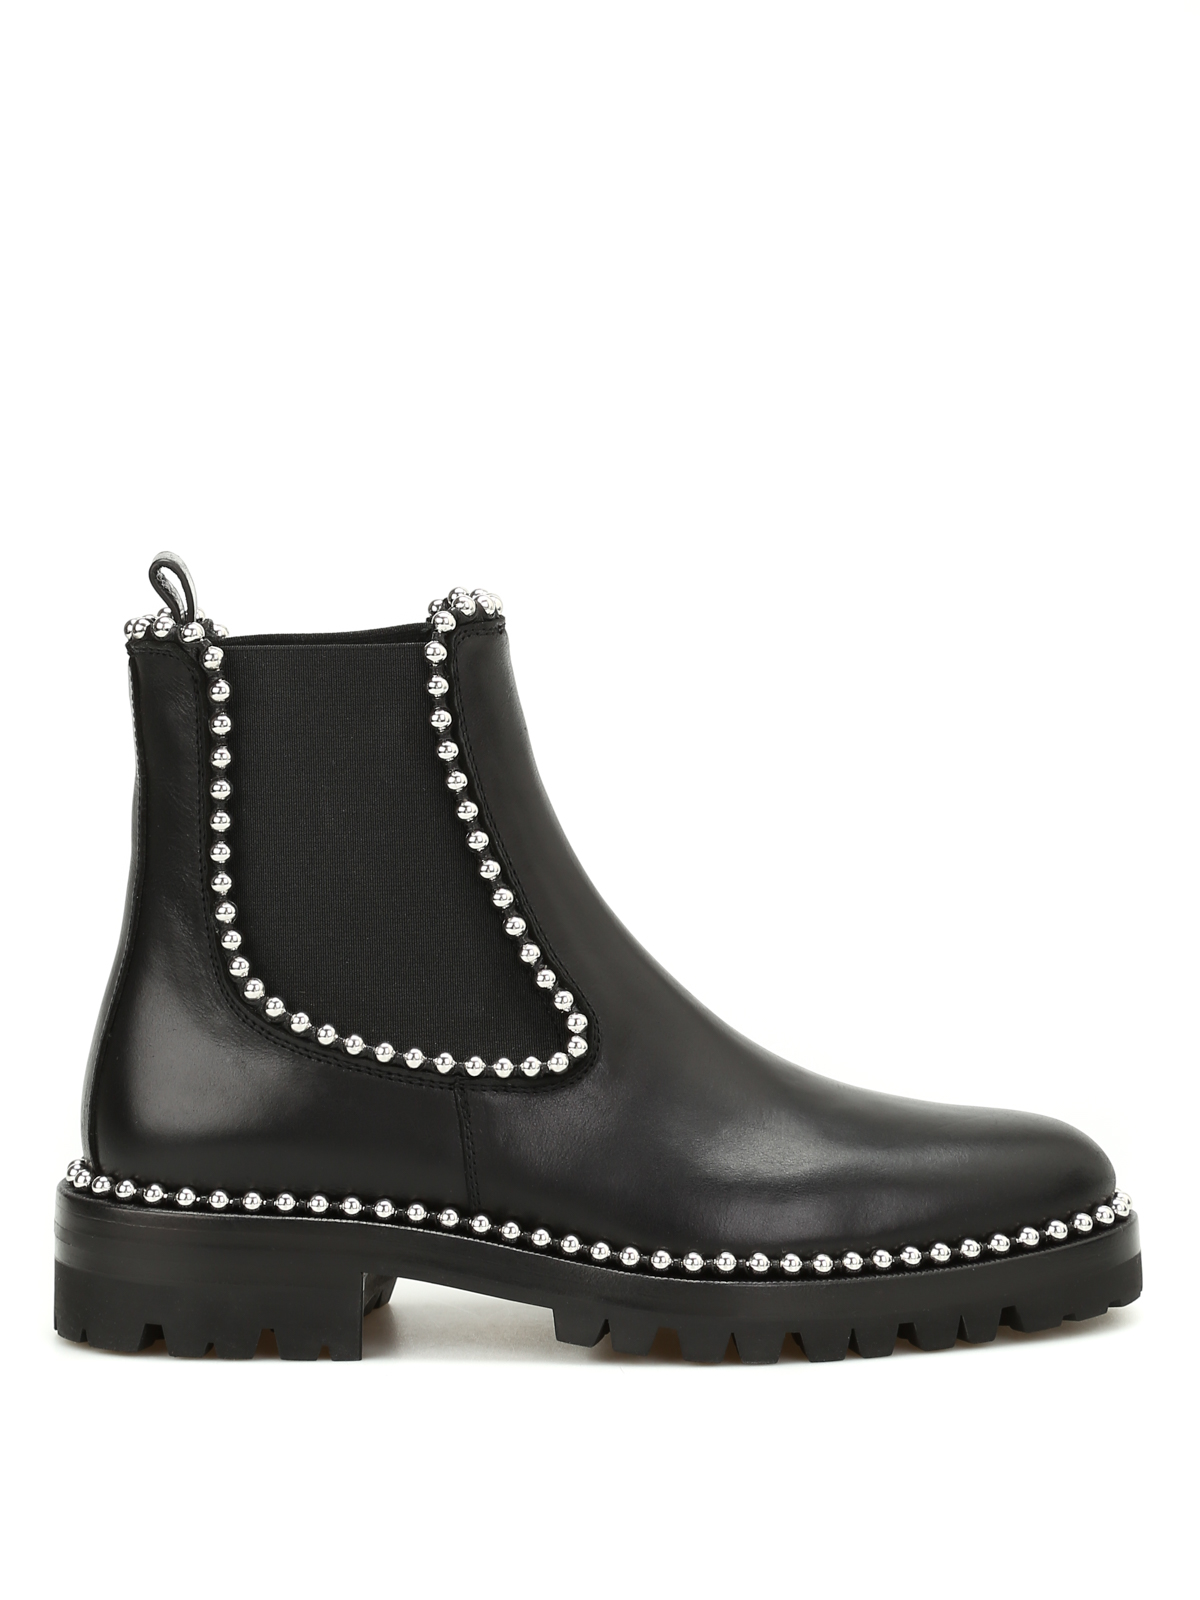 alex black studded chelsea boots